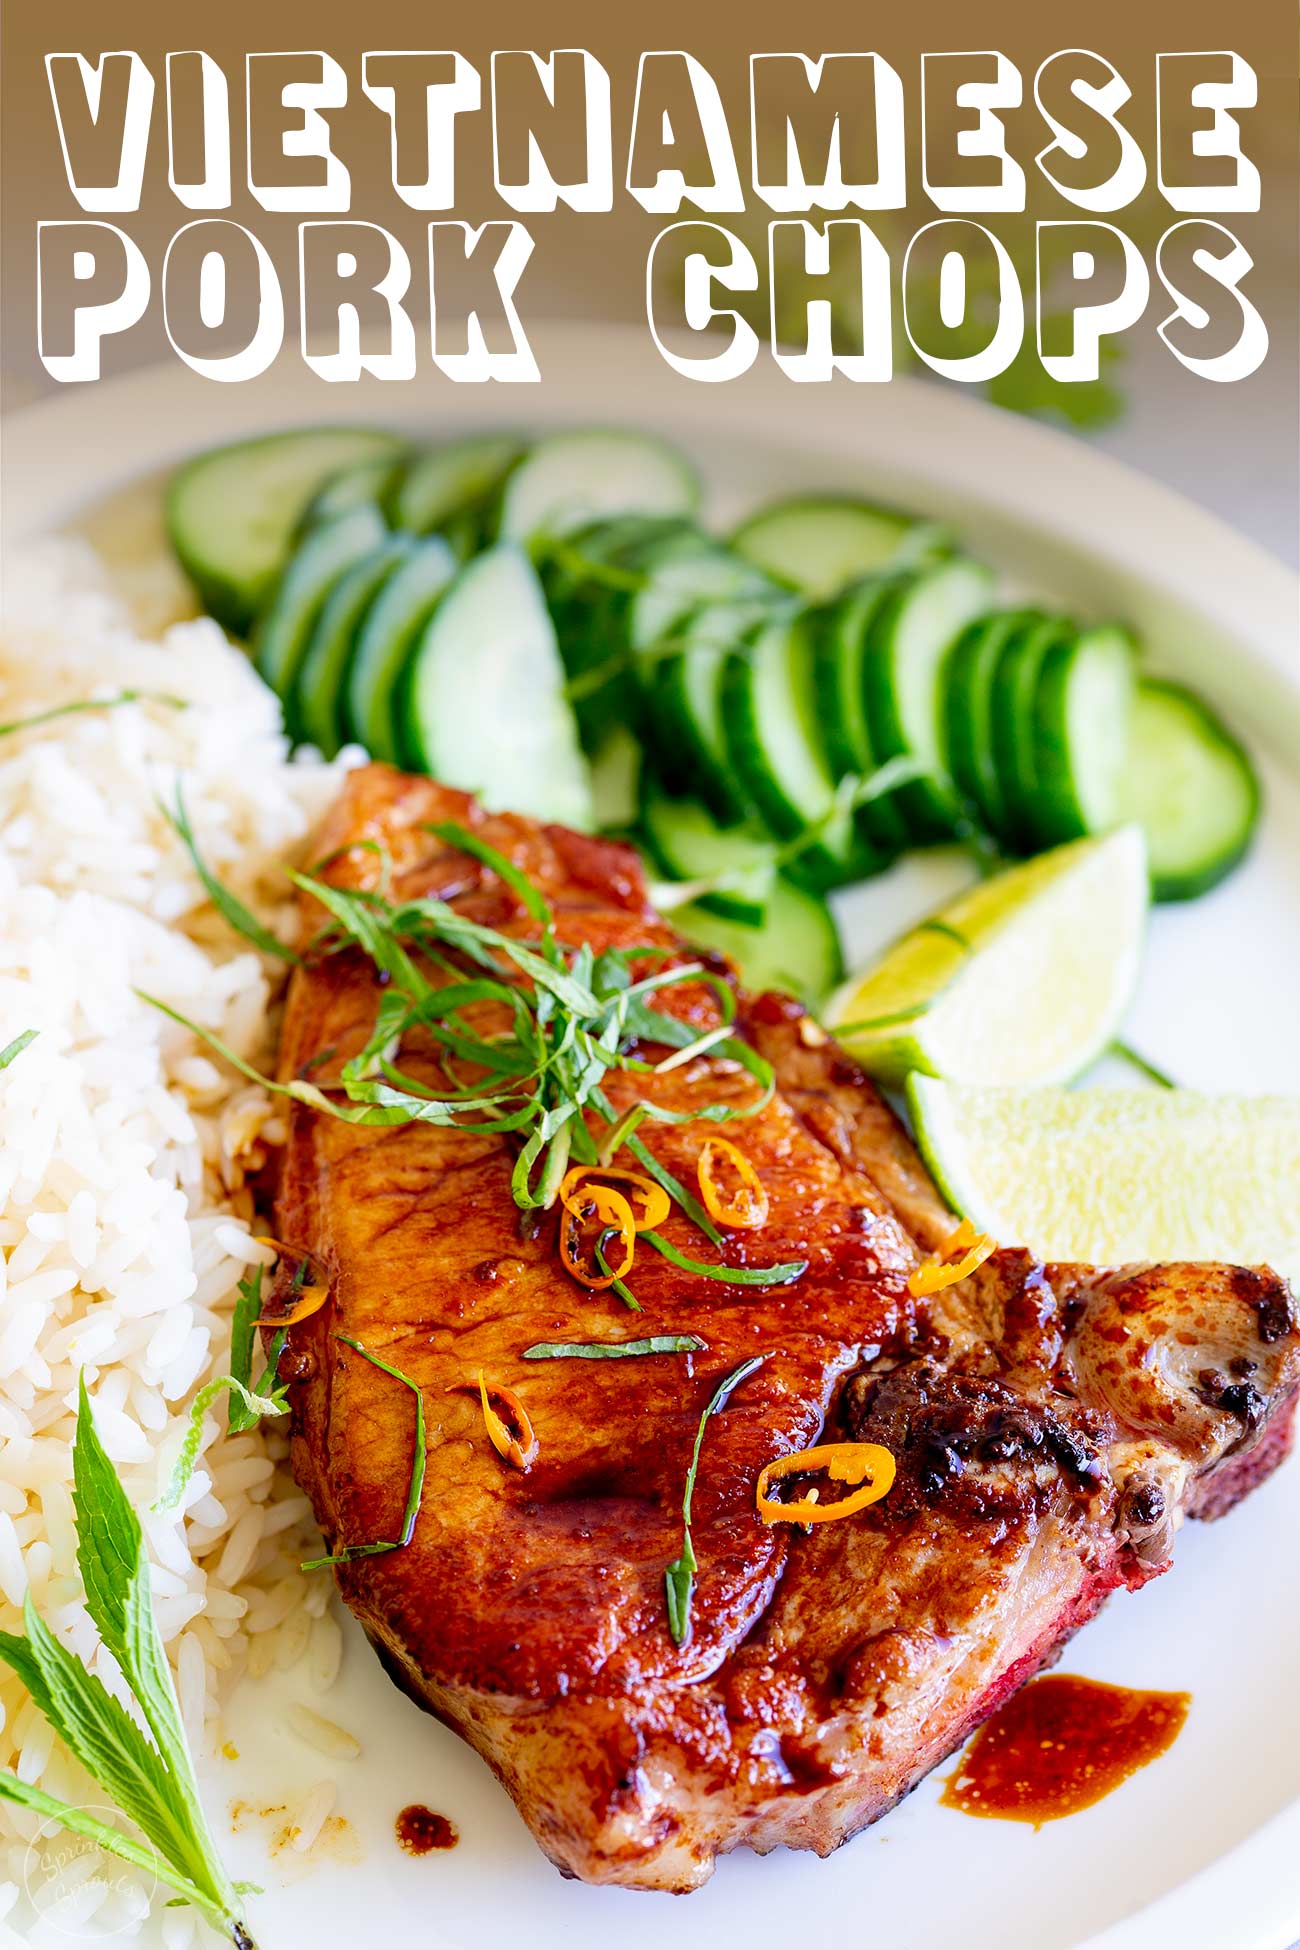 PINTEREST IMAGE: Vietnamese pork chop with text overlay